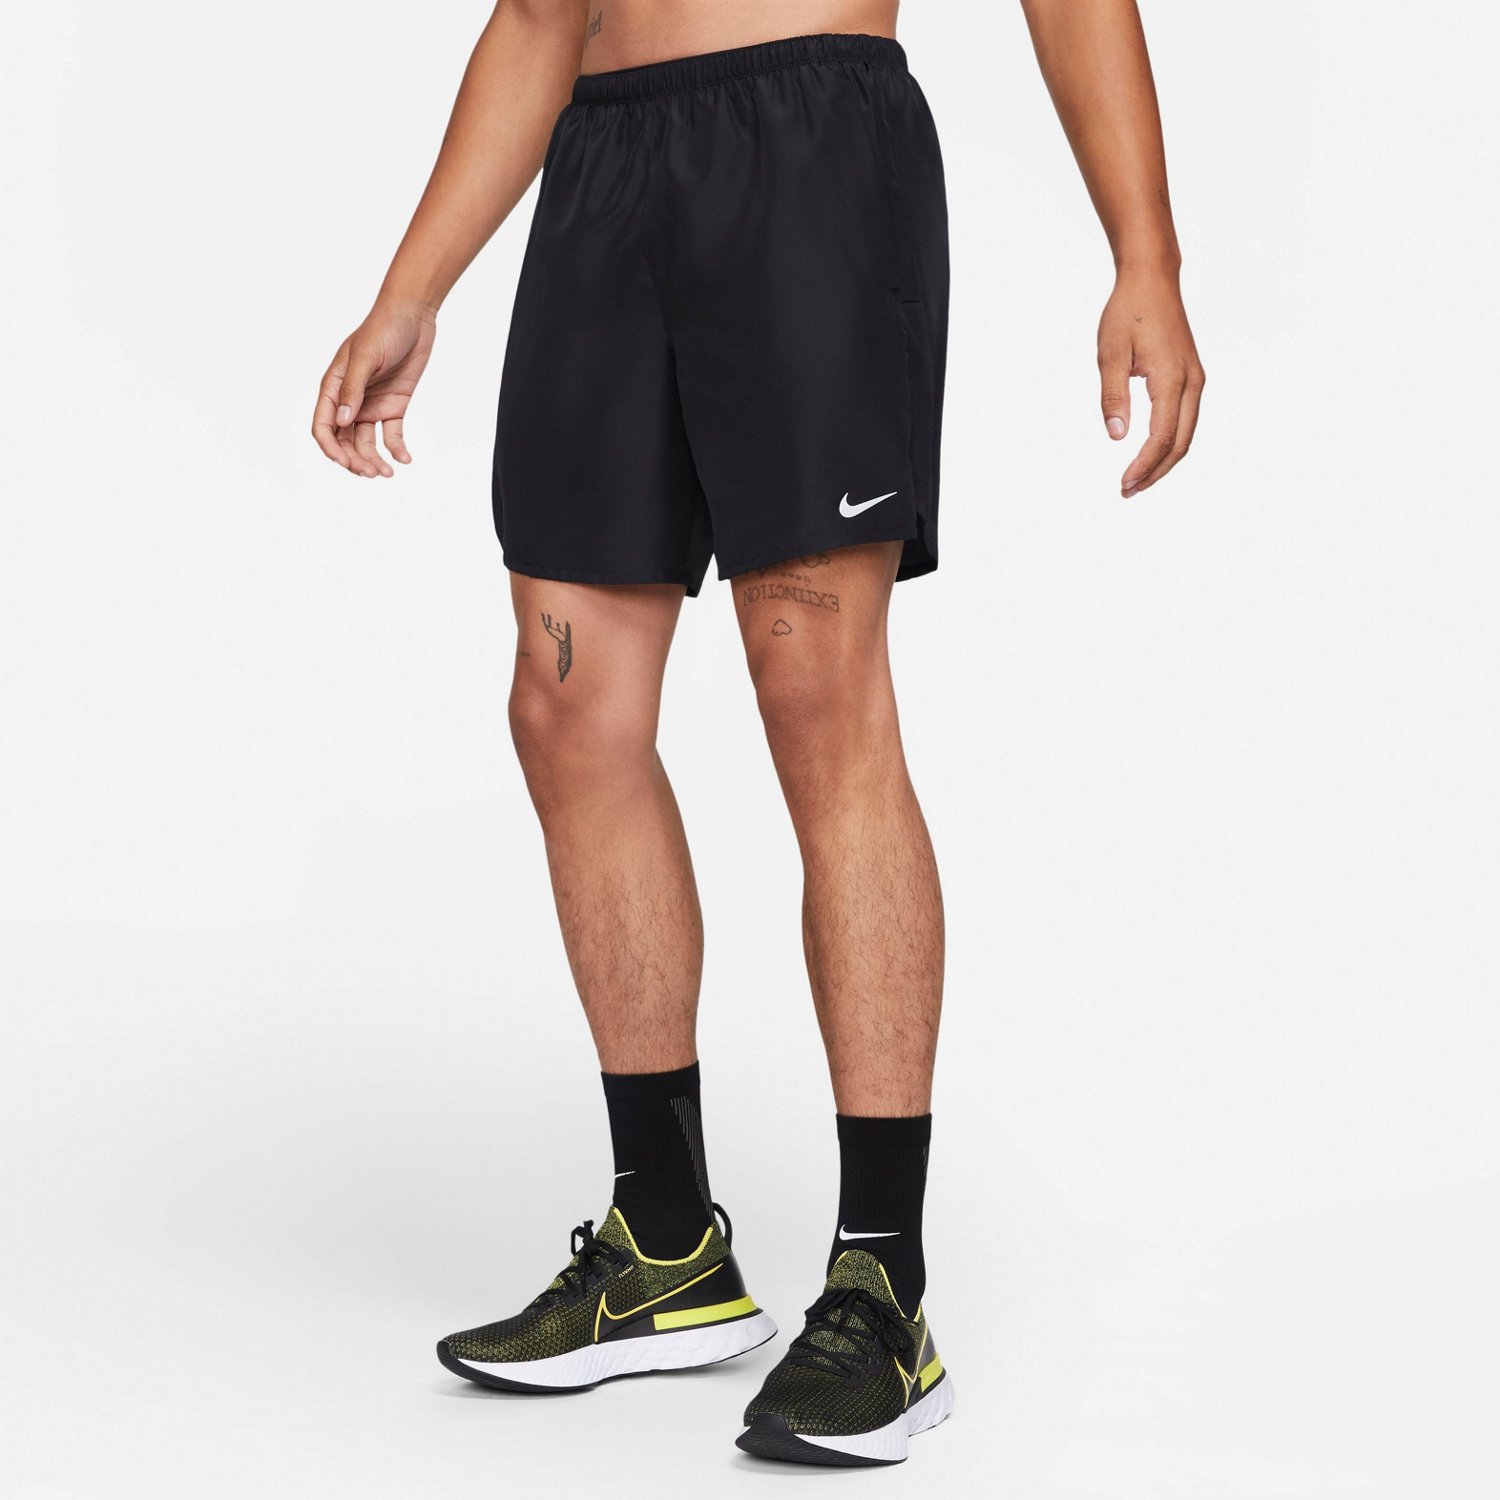 Nike Challenger Men's Dri-FIT 7 2-in-1 Running Shorts.